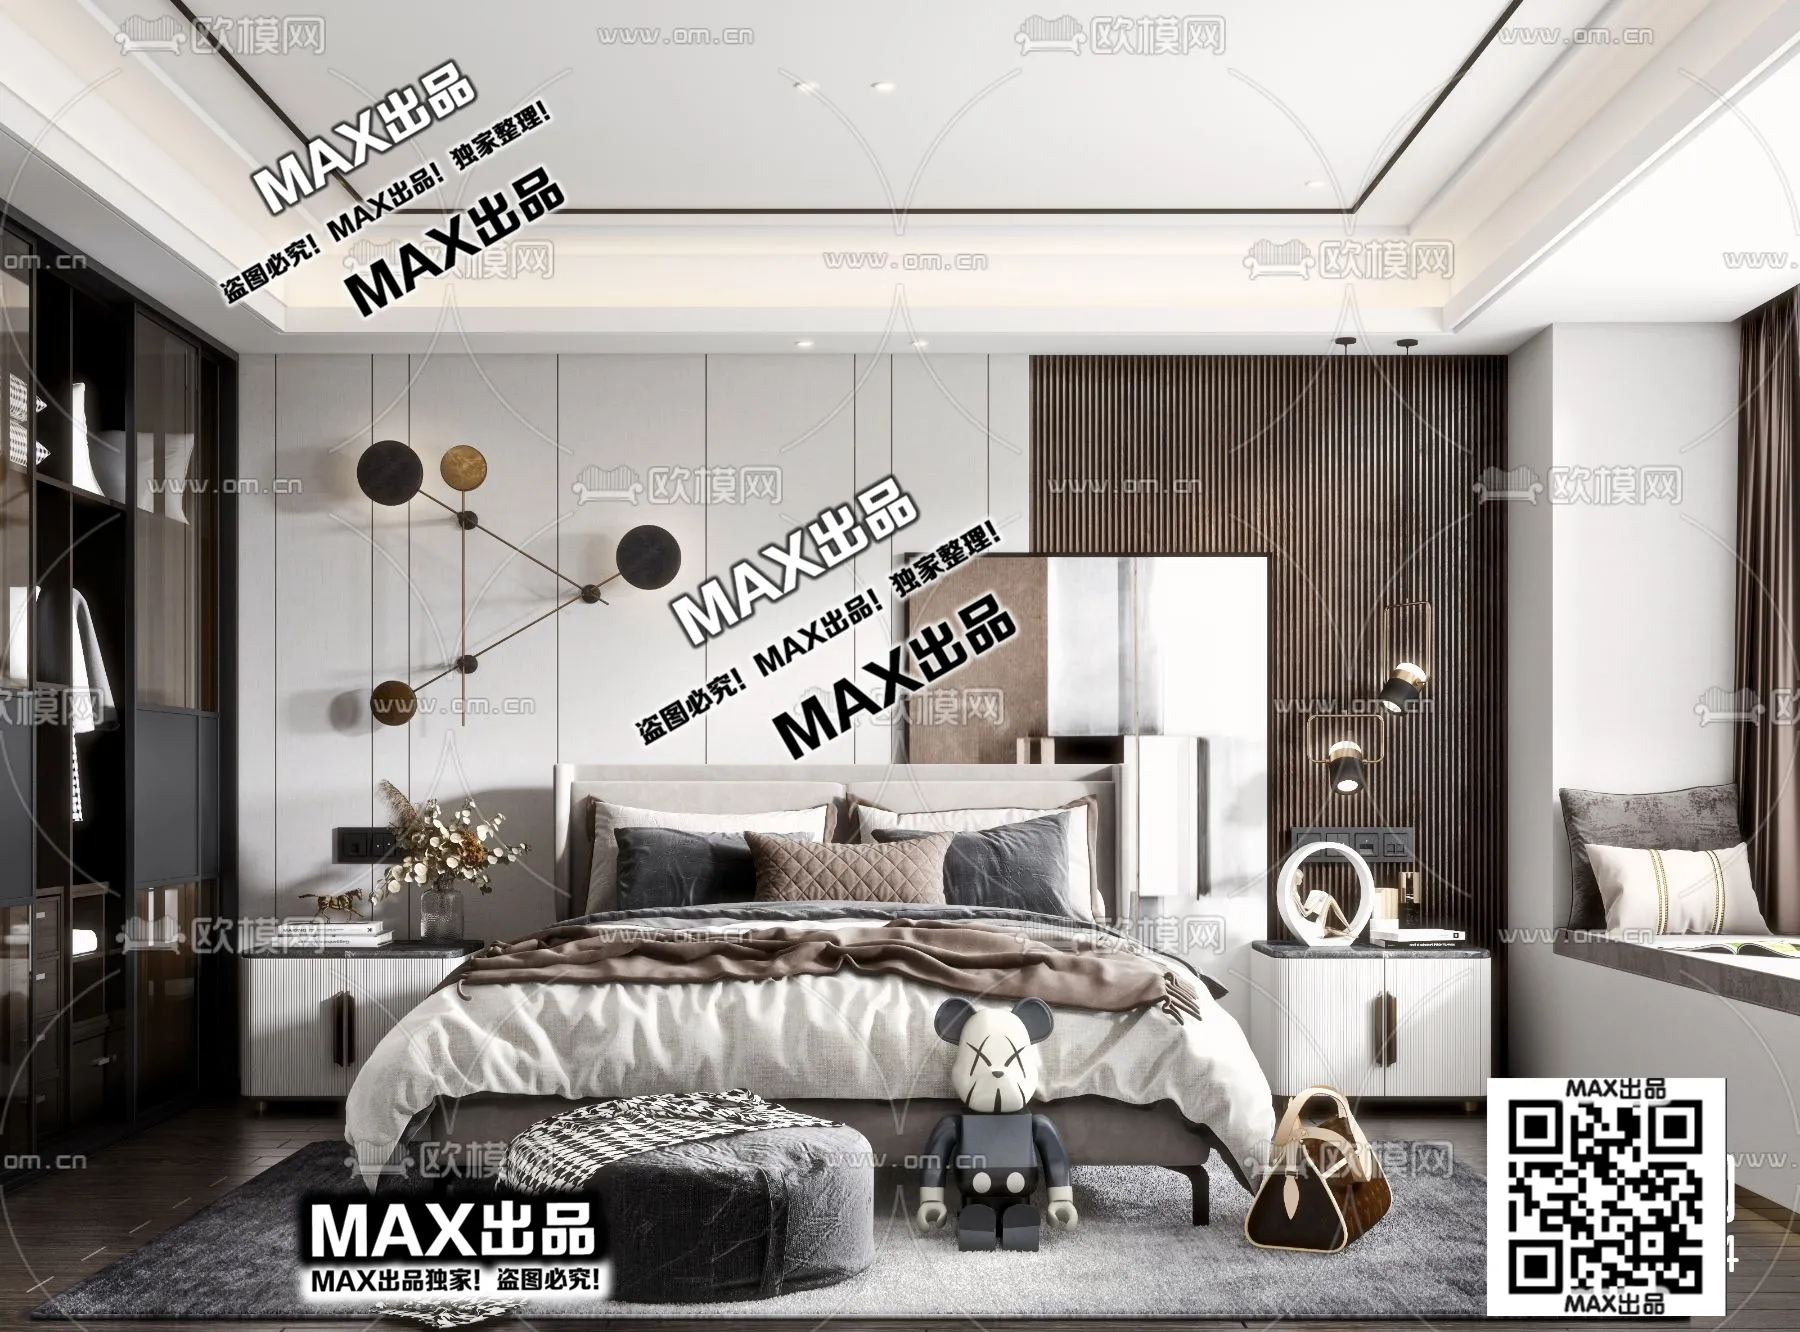 3DS MAX SCENES – LIVING ROOM – 015